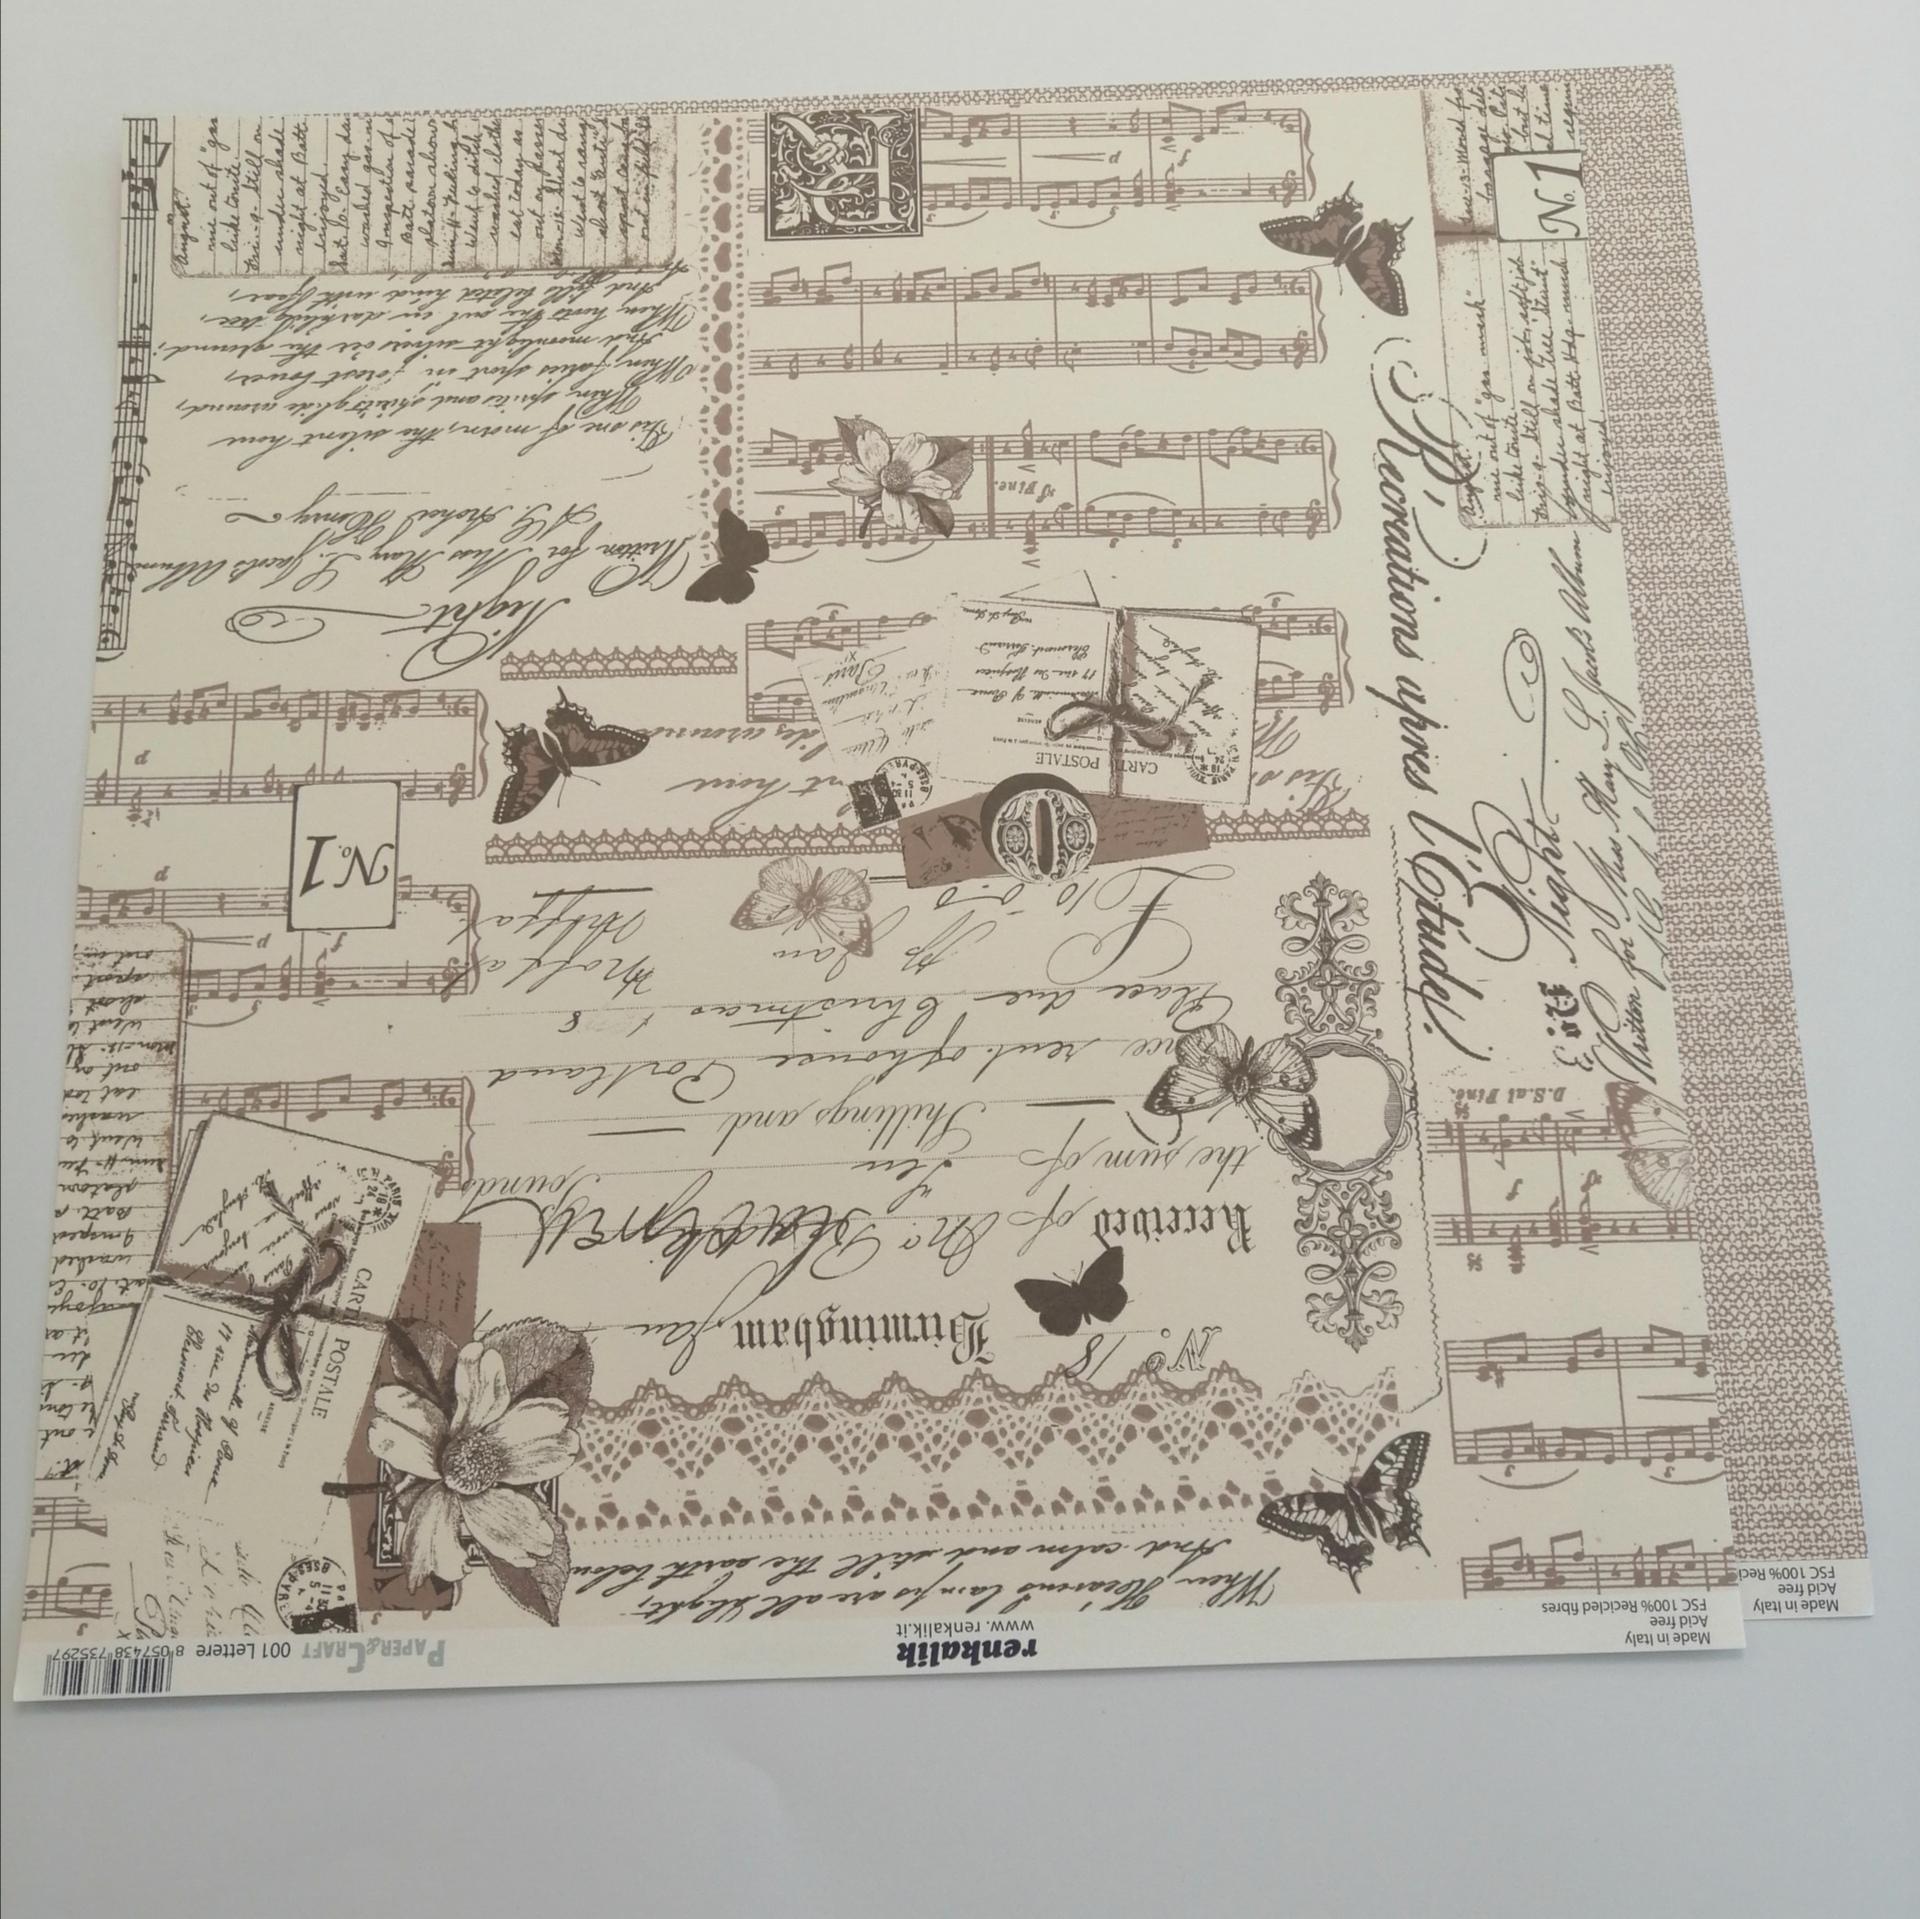 carta scrapbooking fantasia lettere, fiori, spartiti e note musicali  renkalik 30 cm x 30 cm - Bagheria (Palermo)